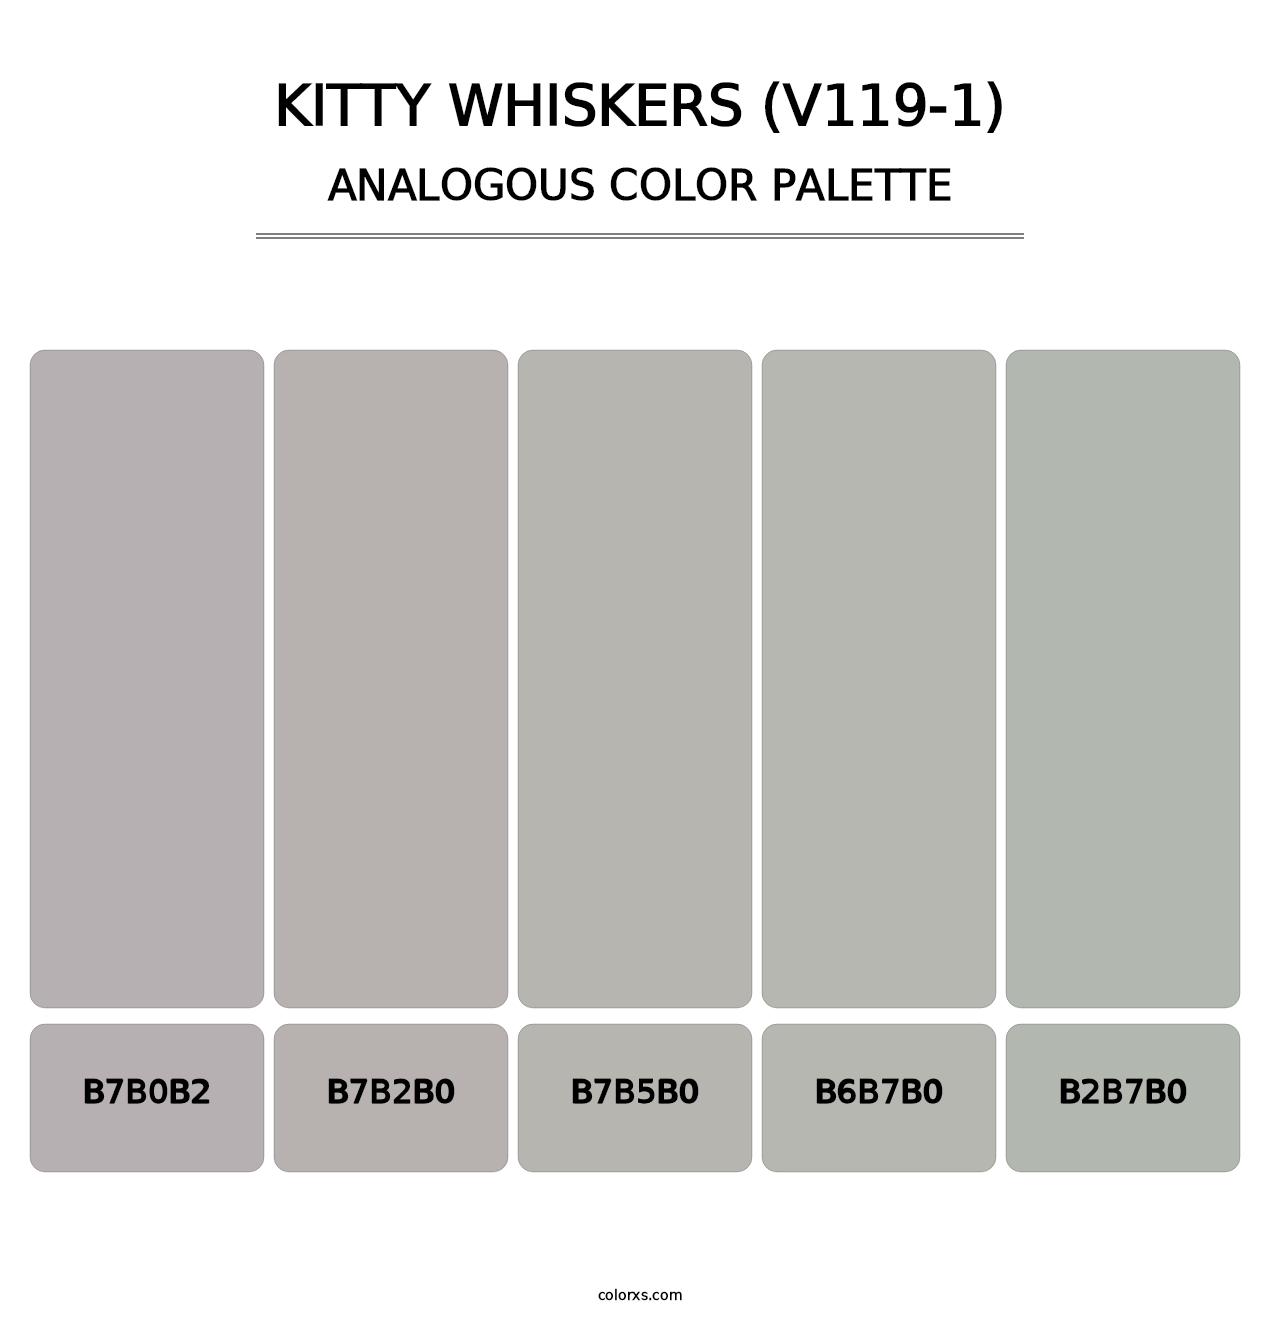 Kitty Whiskers (V119-1) - Analogous Color Palette